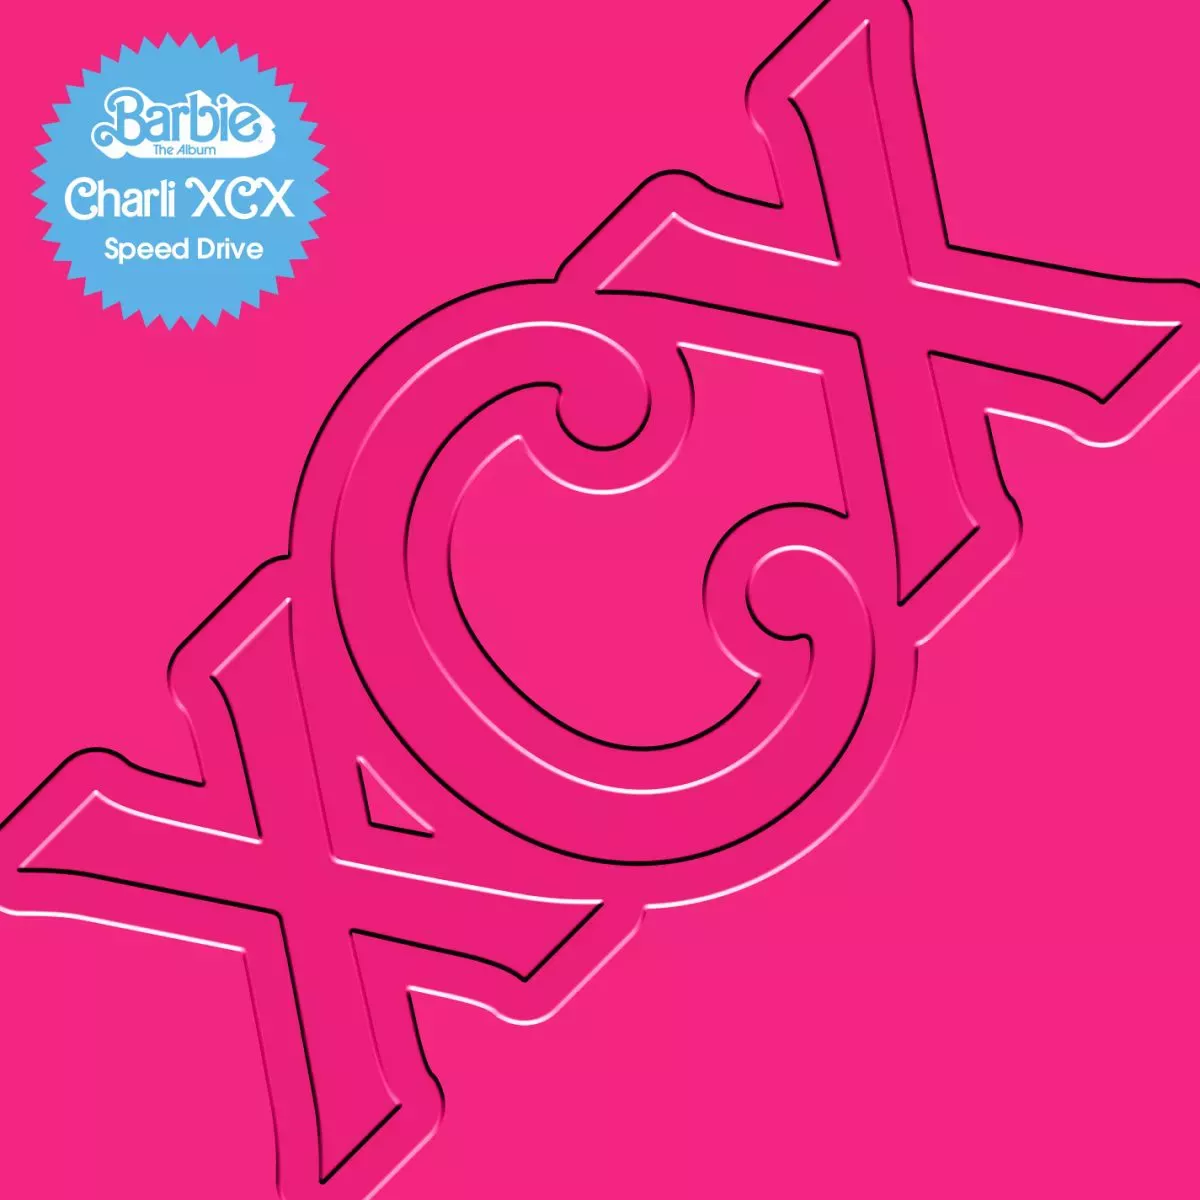 Escucha el icónico single de Charli XCX "Speed Drive" de "Barbie The Album".